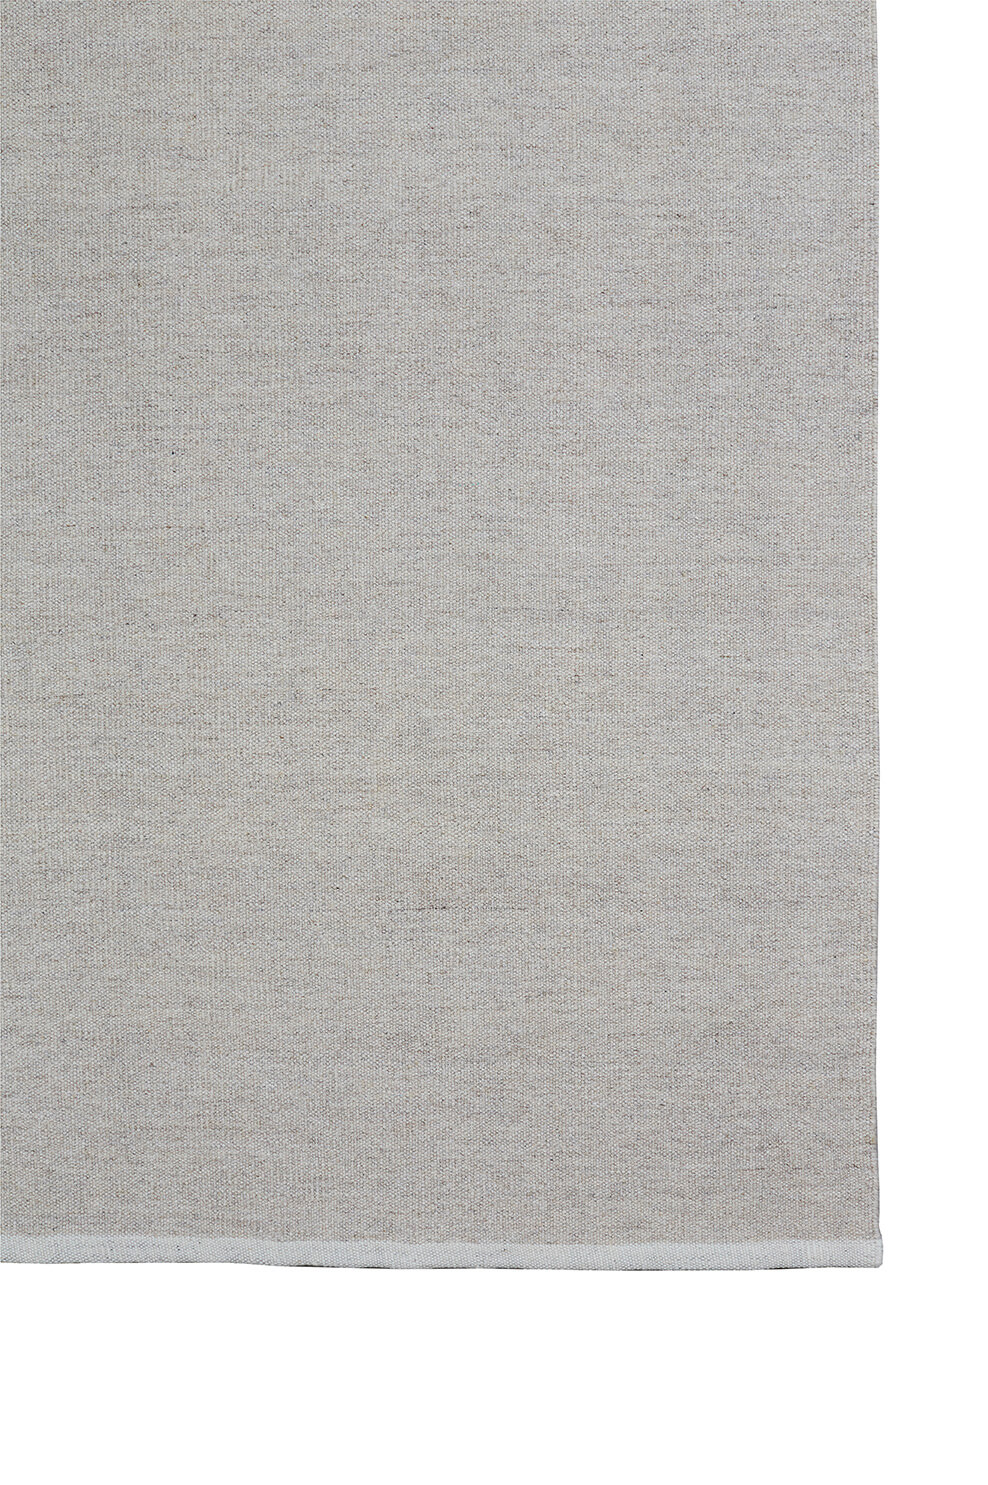 Escape Kelim Teppich ohne Nähten, 250 x 350 cm, light beige